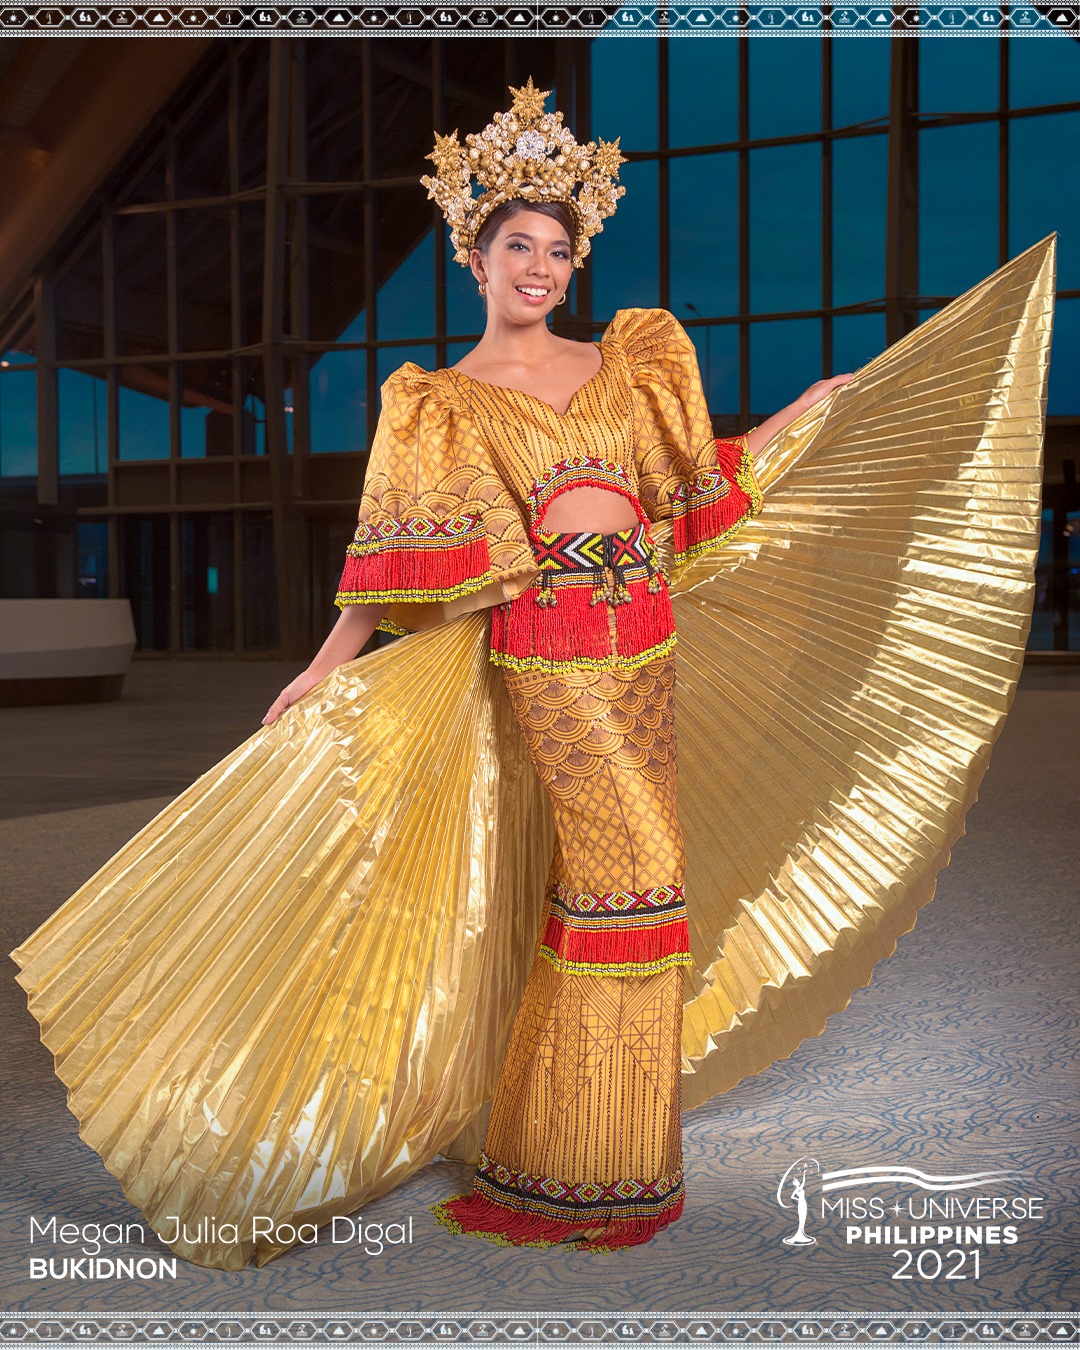 miss-universe-bukidnon-megan-julia-roa-digal-national-costume-photo.jpg